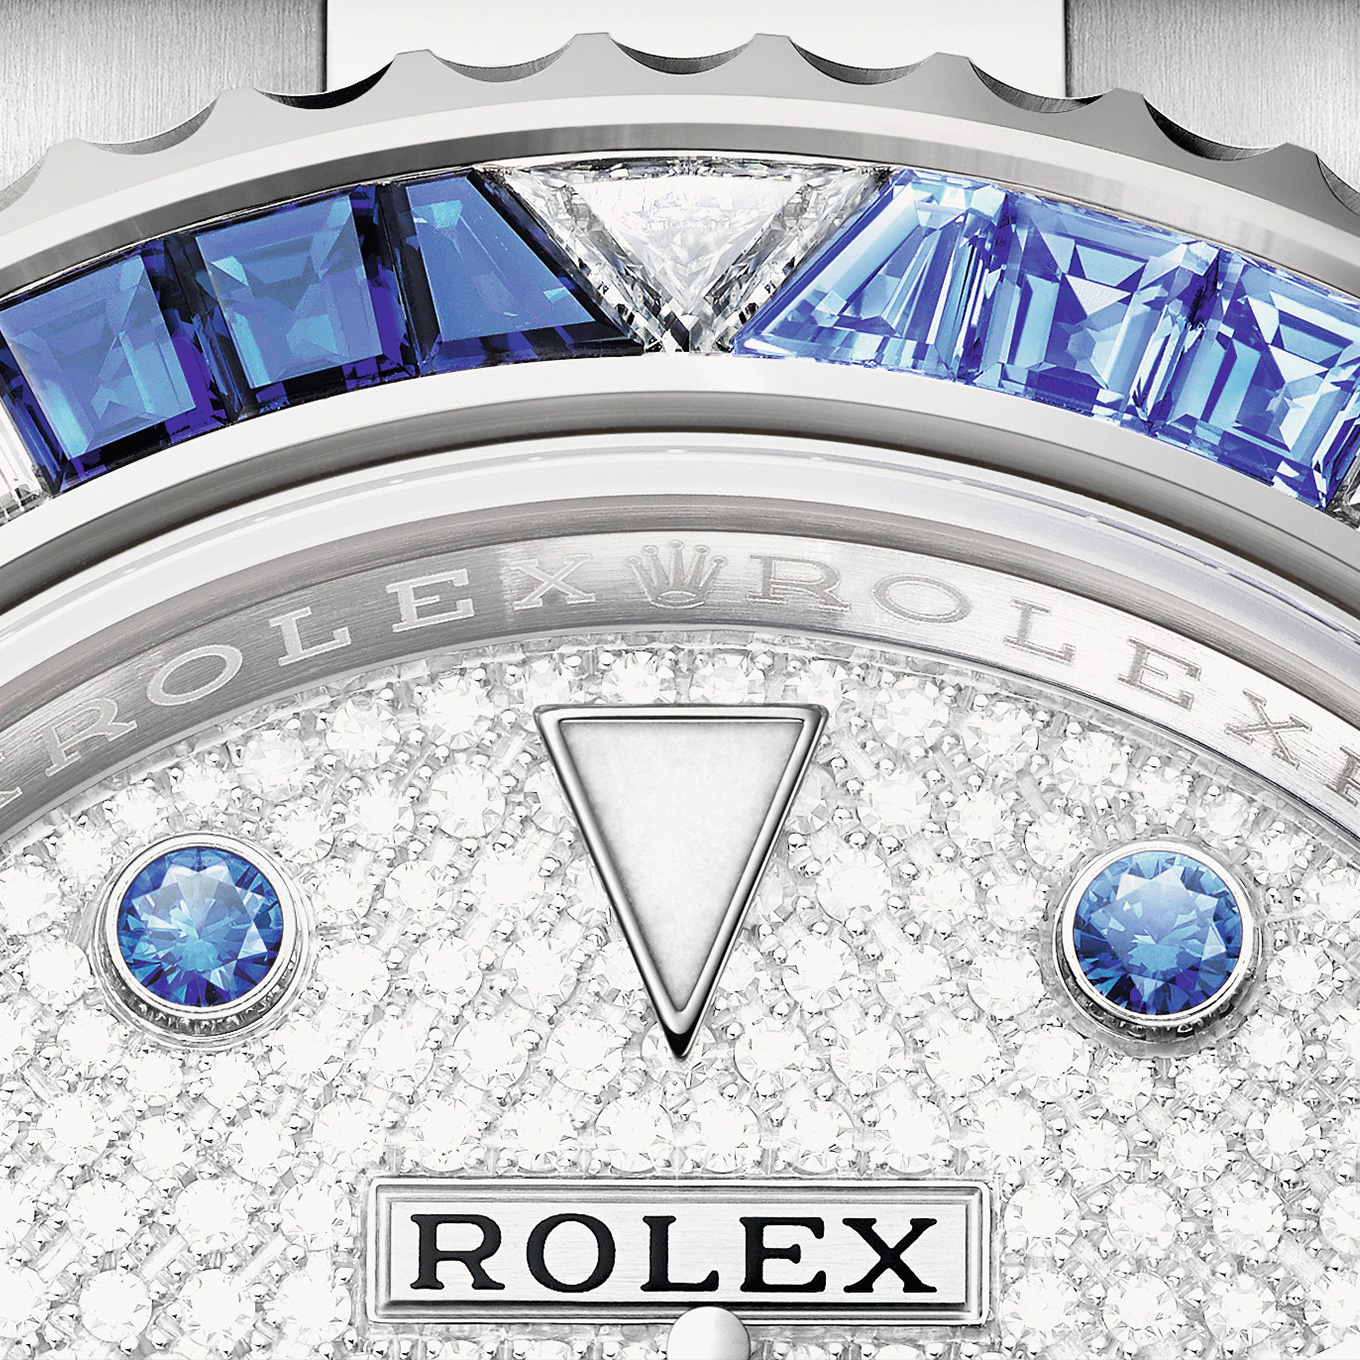 Rolex 116234 DATEJUST WATCH BLUE ANNIVERSARY DIAMOND DIAL & FLUTED BEZELRolex 116234 DATEJUST WATCH CUSTOM BLUE DIAMOND DIAL & FLUTED BEZEL